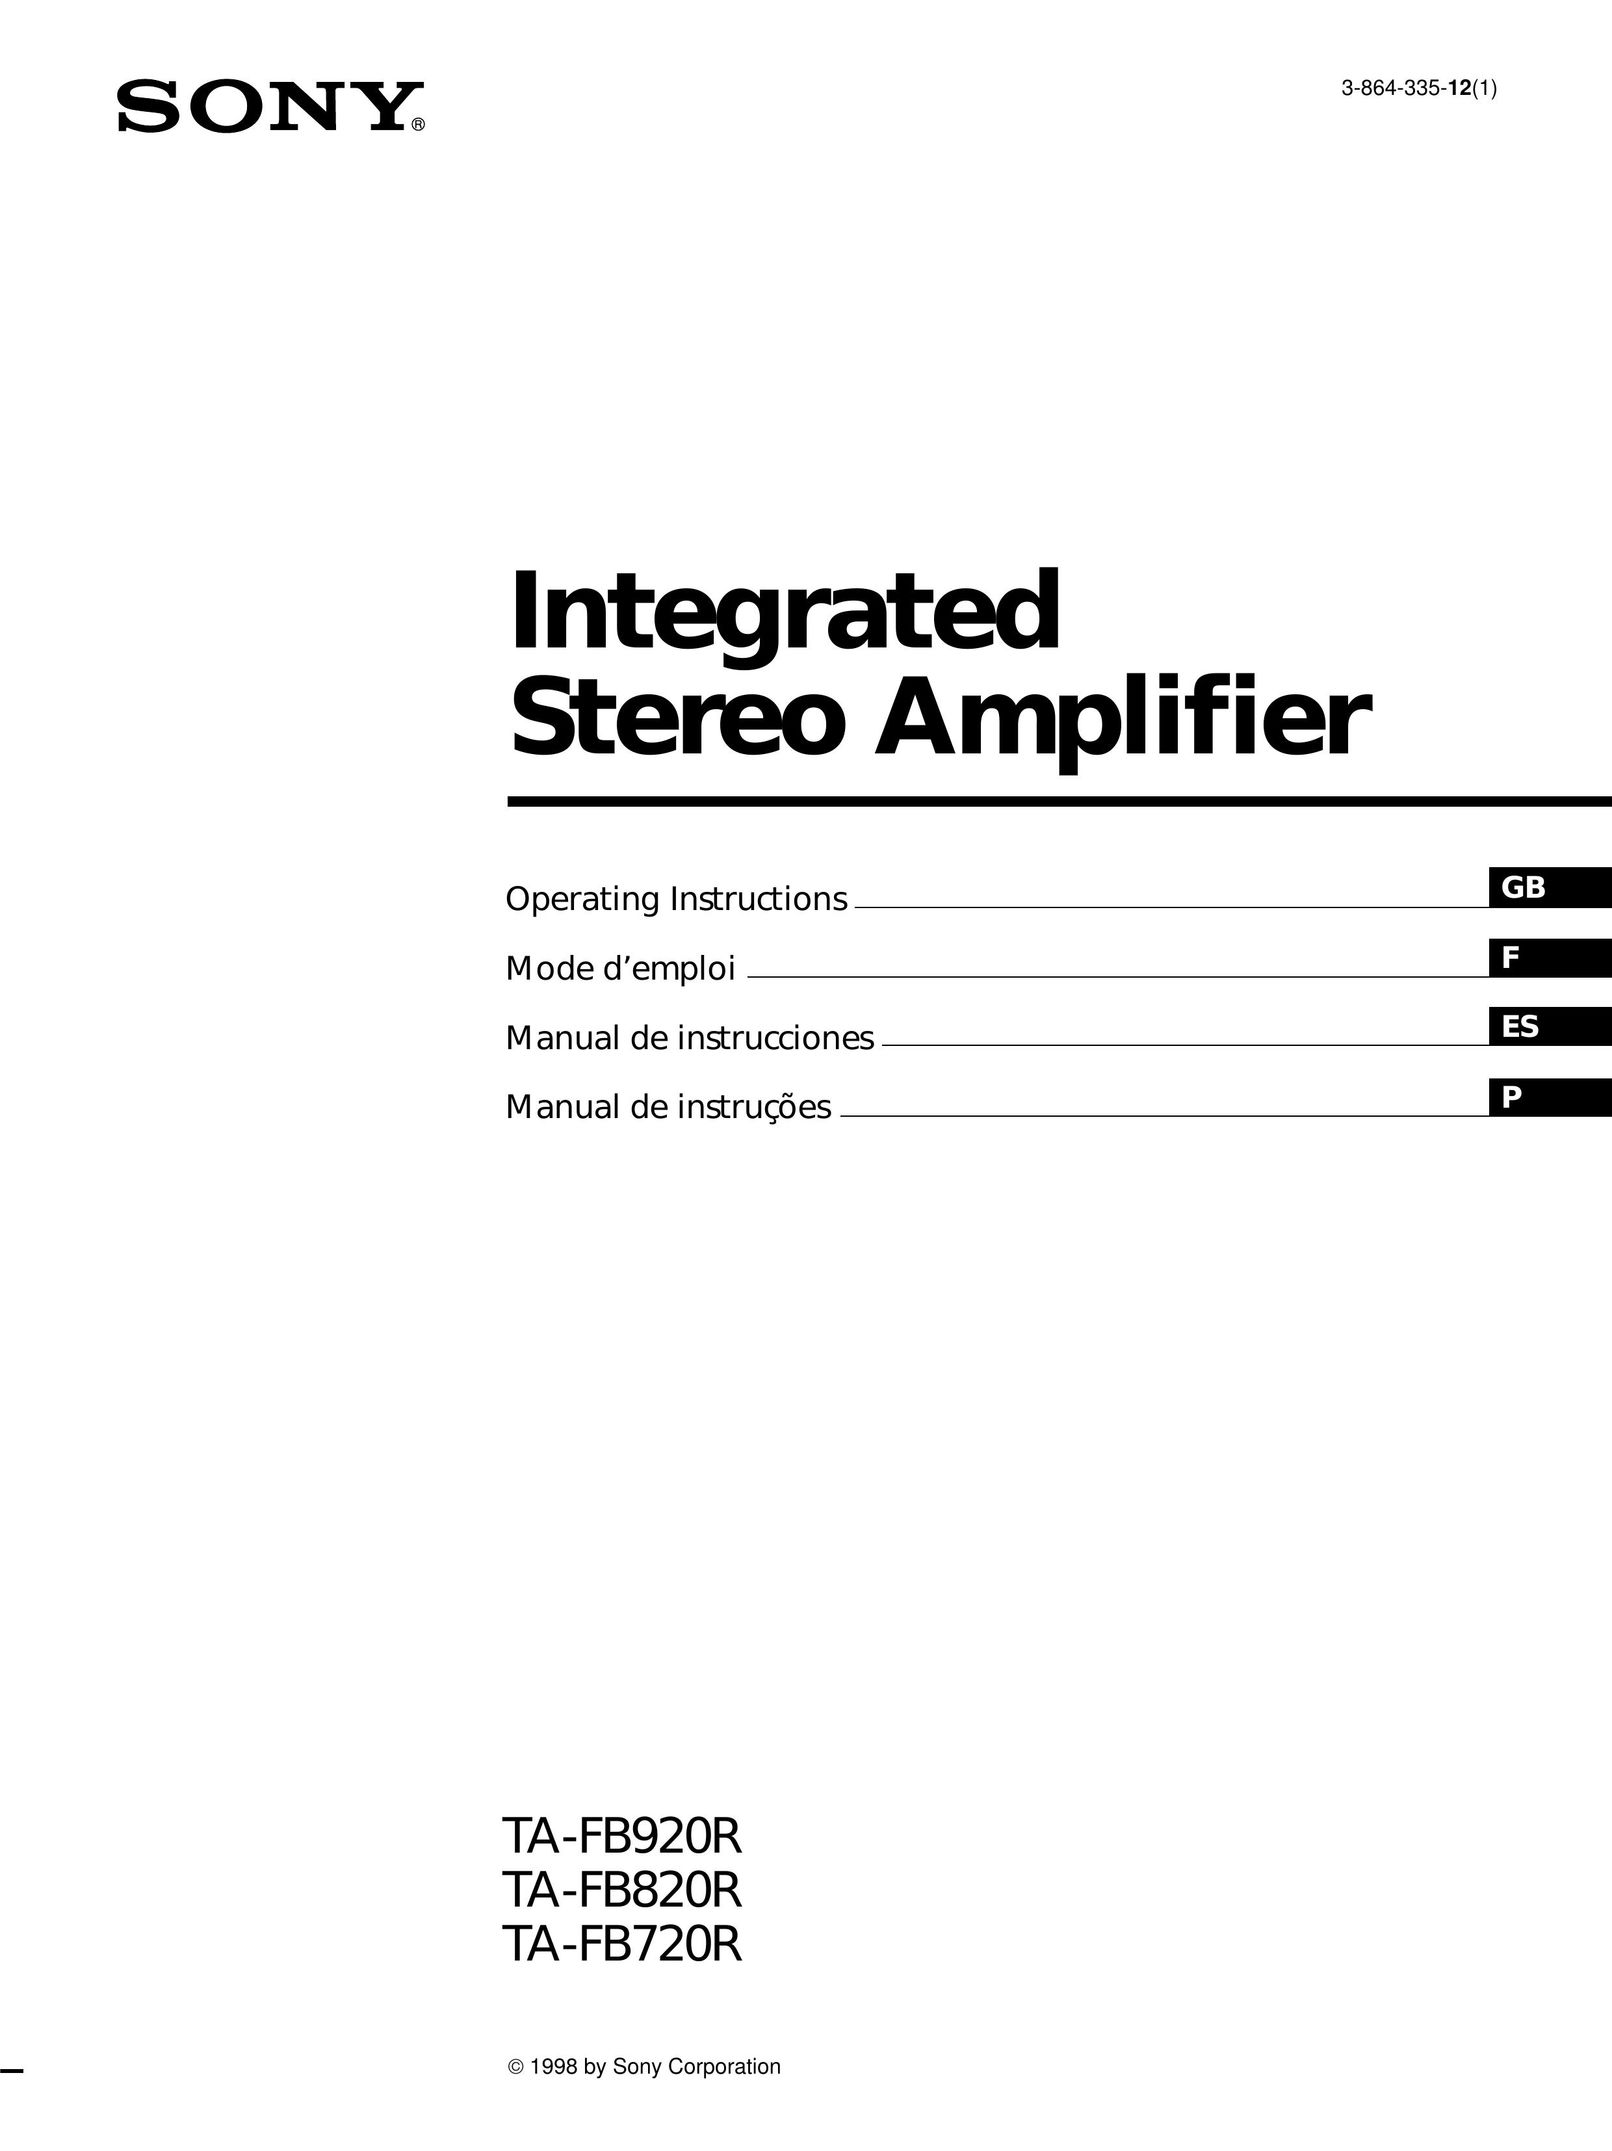 Sony TA-FB820R Stereo Amplifier User Manual